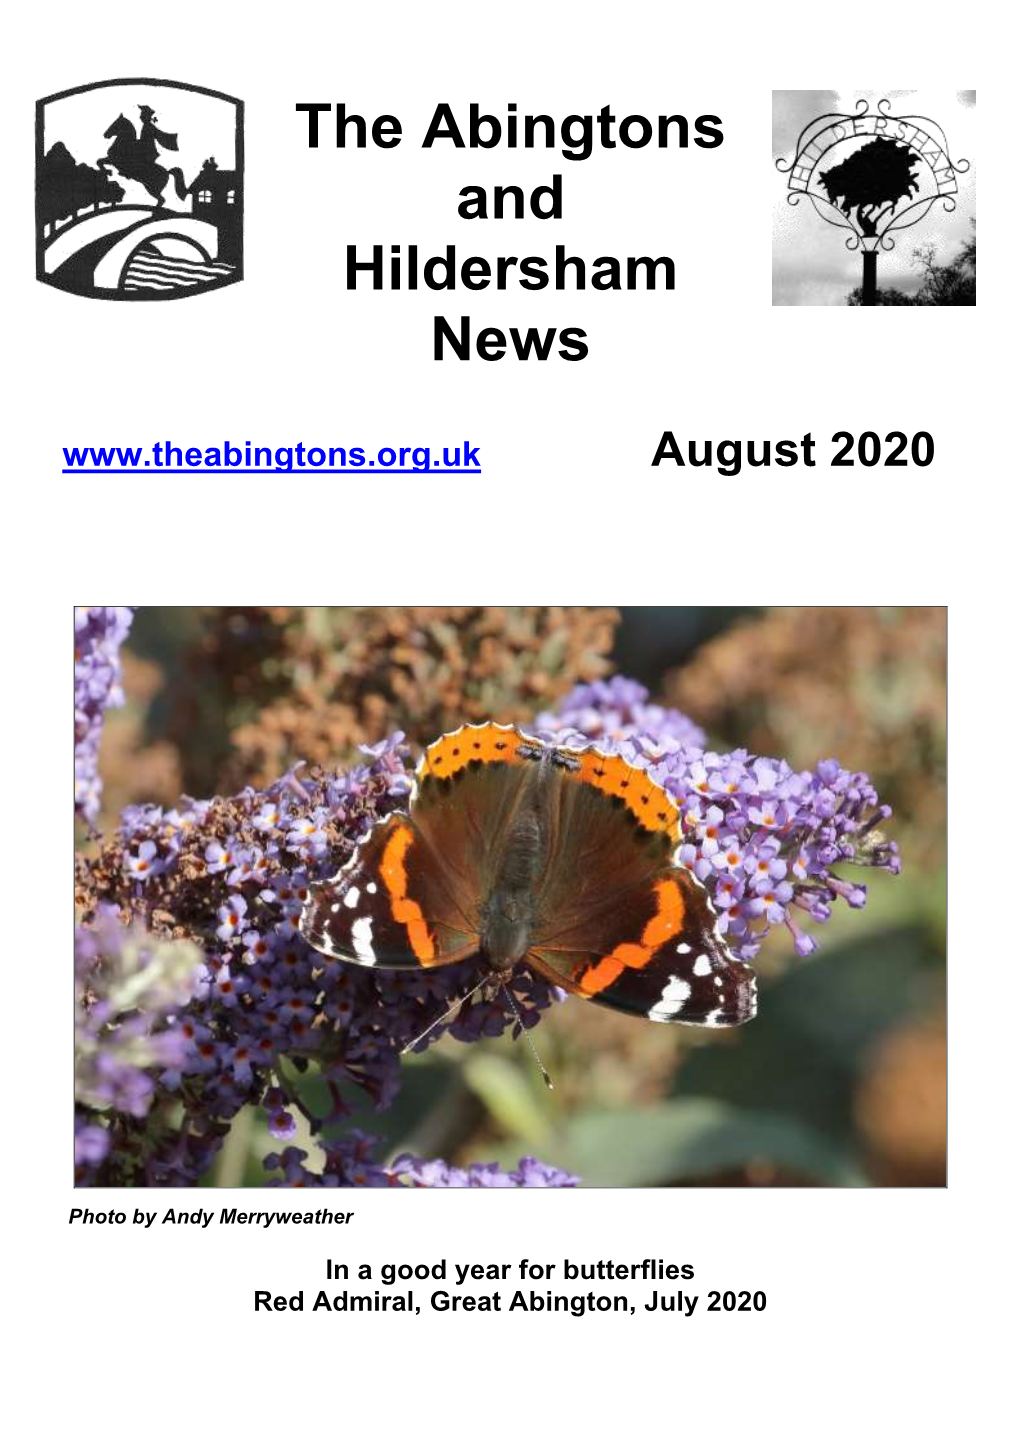 The Abingtons and Hildersham News August 2020